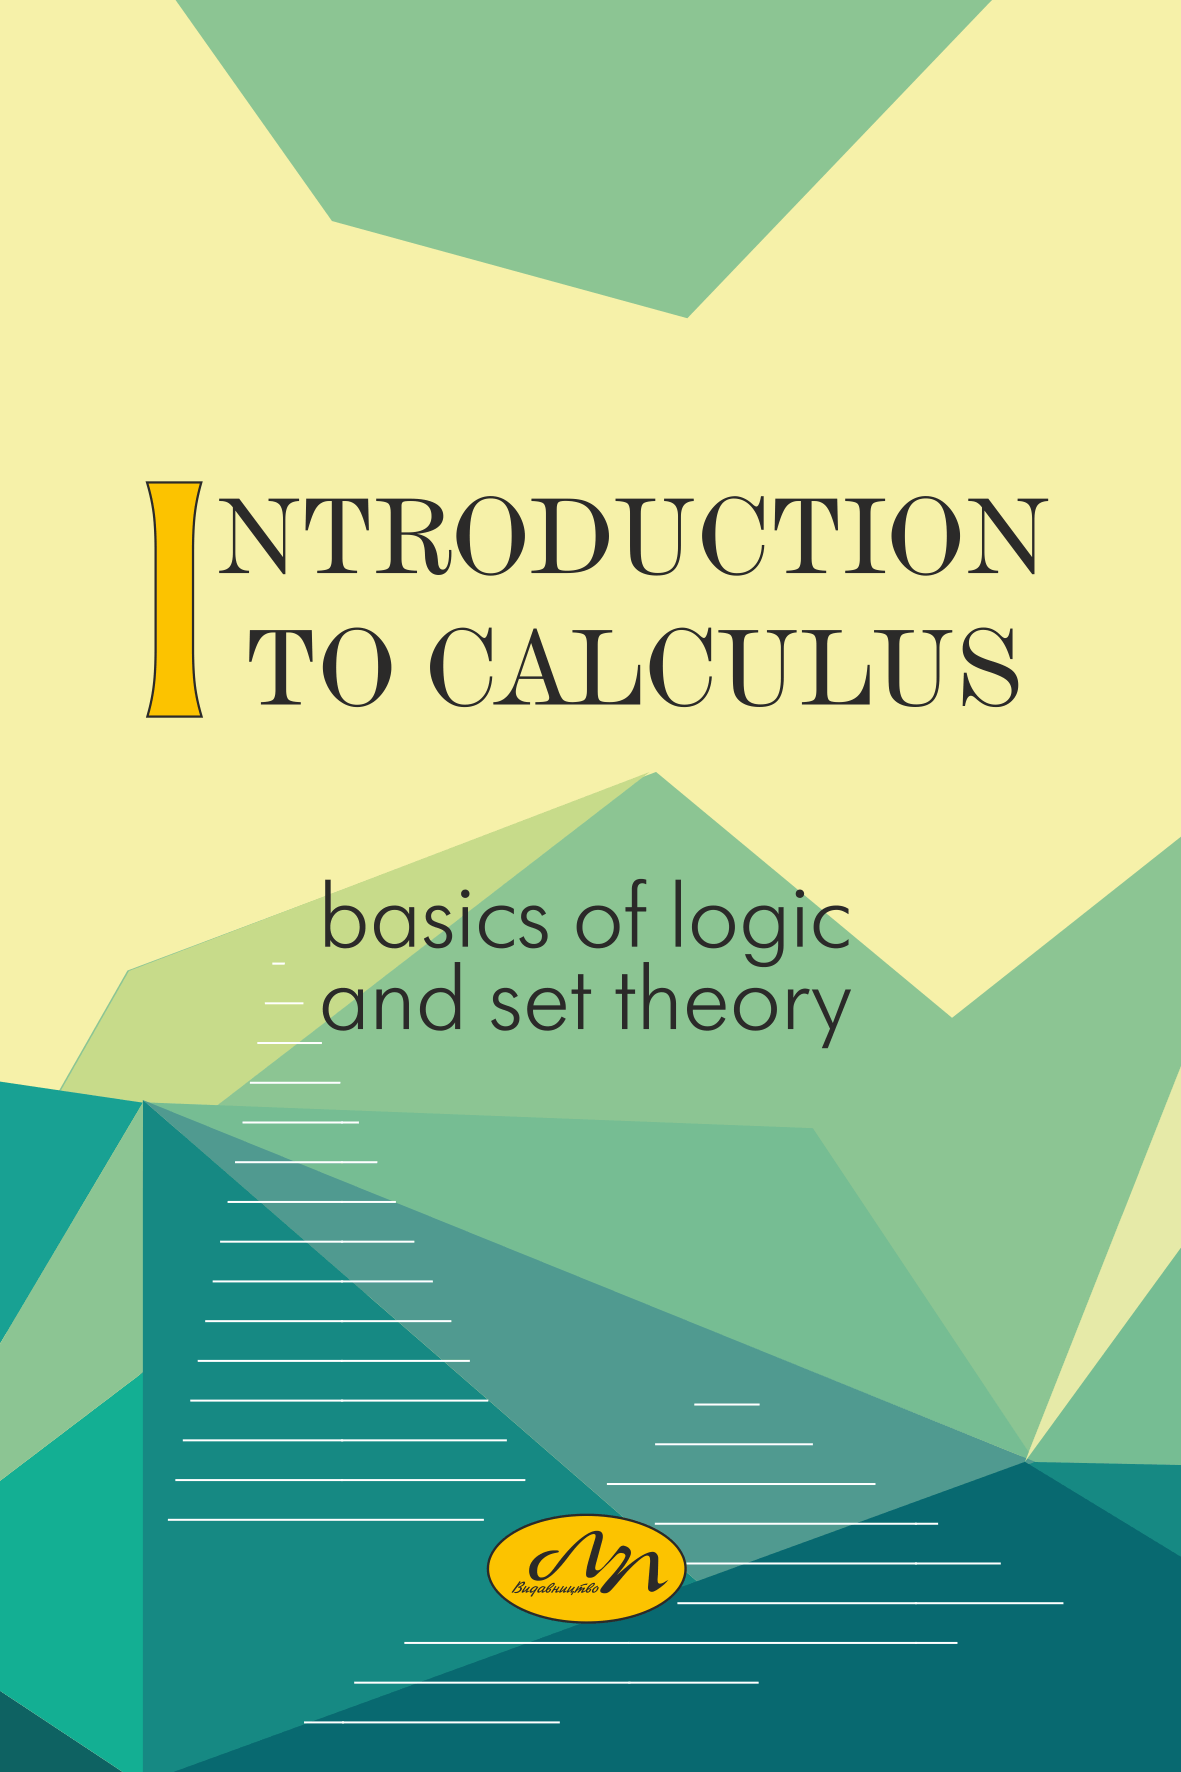 Вступ до математичного аналізу: основи логіки та теорії множин // Introduction to Calculus: Basics of Logic and Set Theory